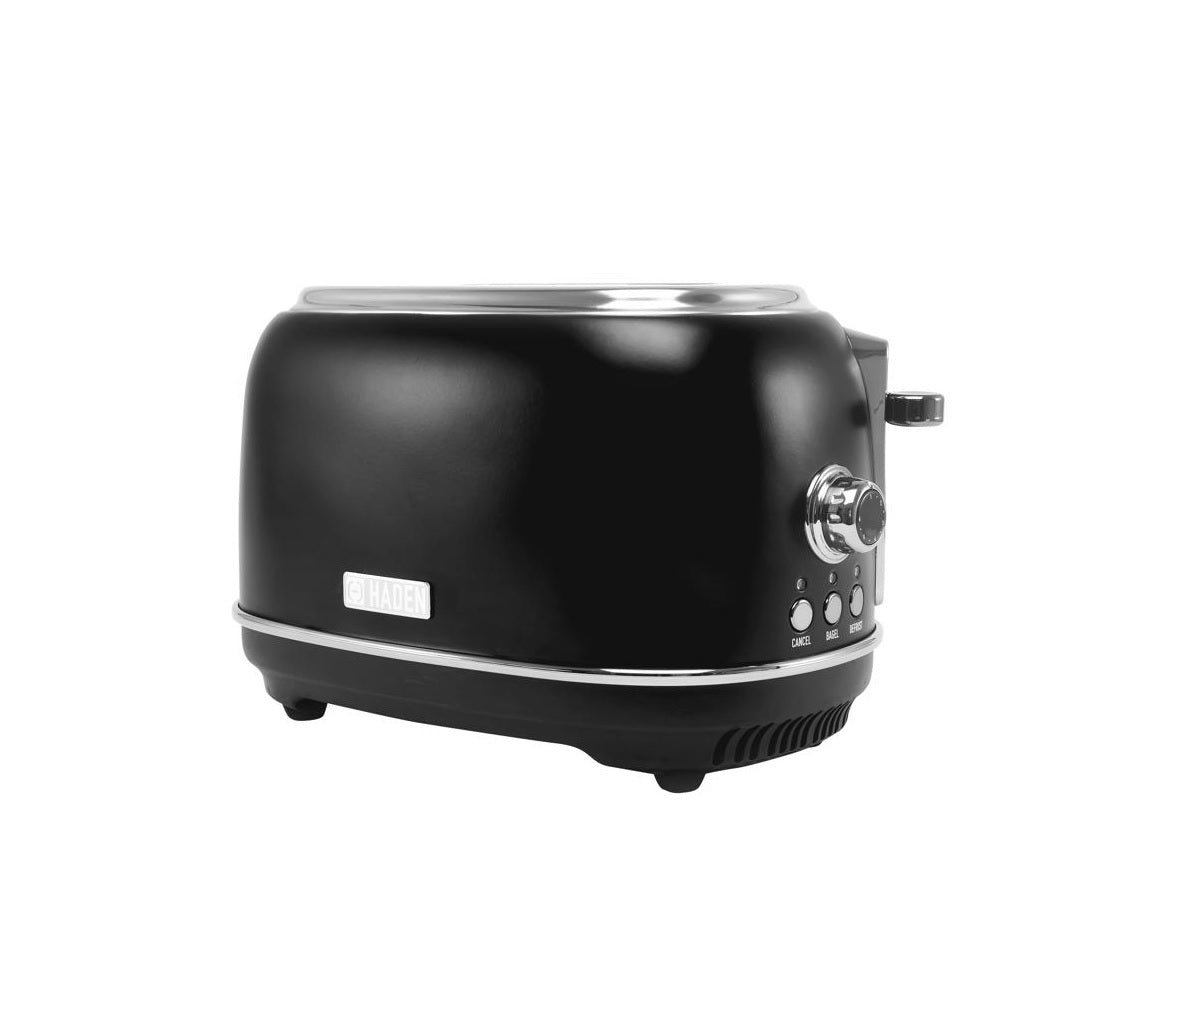 Haden 75097 Heritage 2 Slot Toaster, Stainless Steel, Black